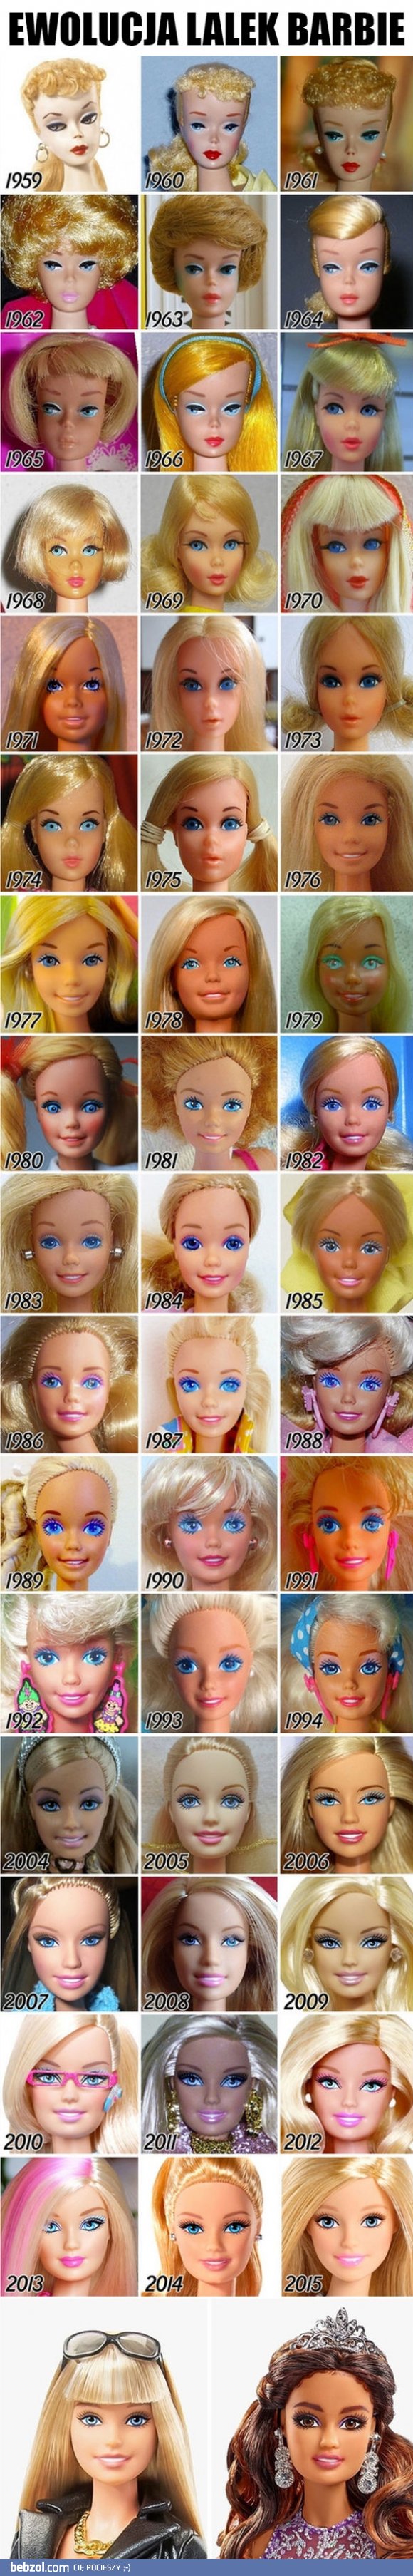 Ewolucja lalek Barbie